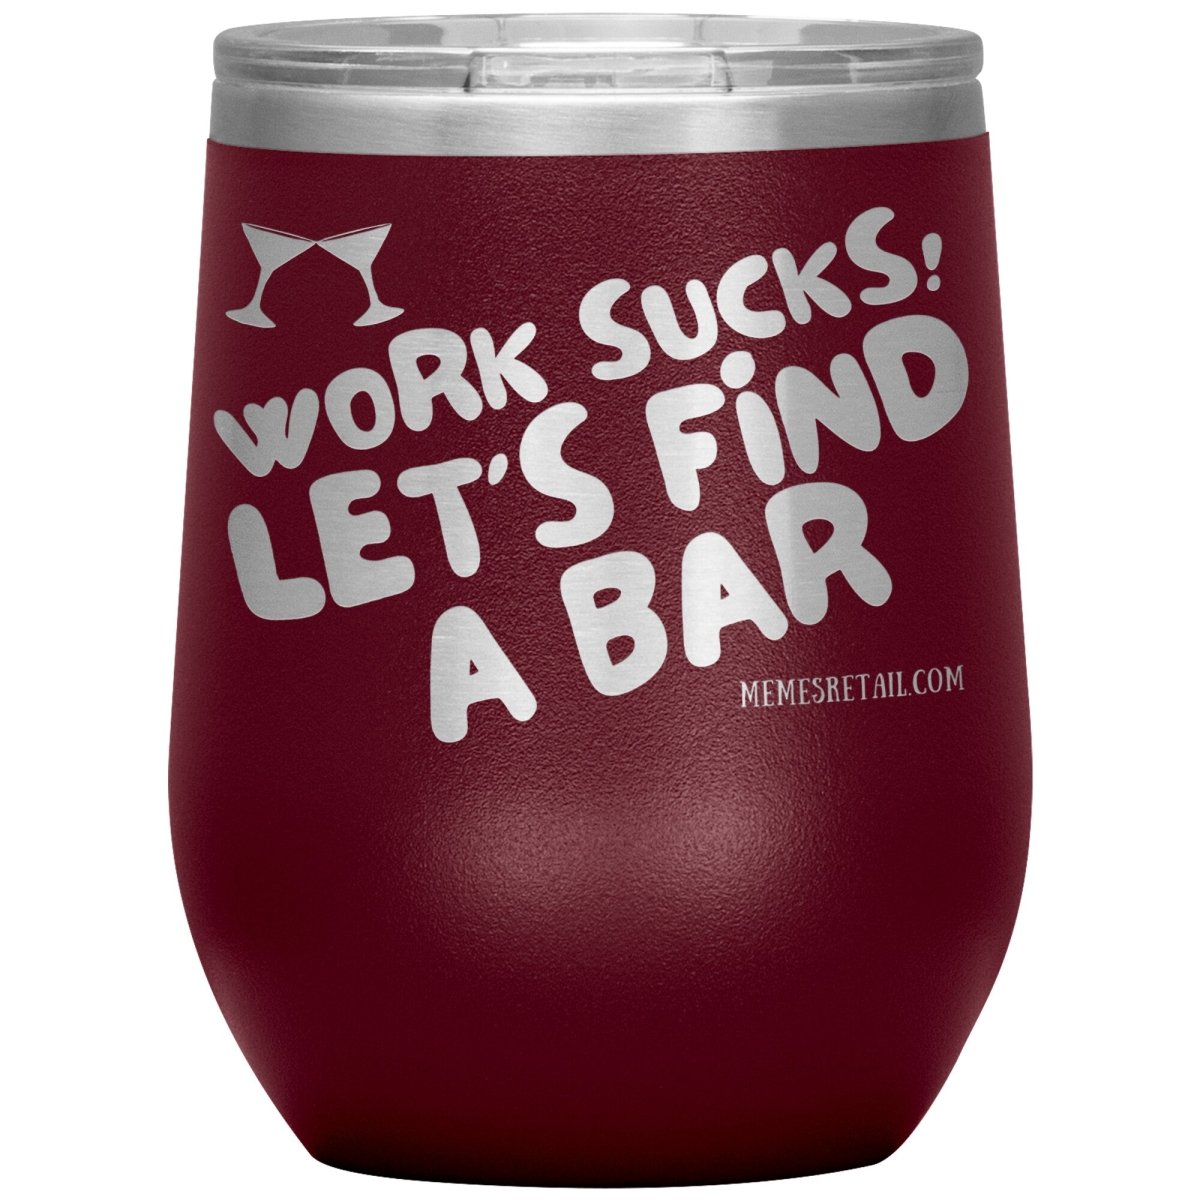 Work Sucks! Let's Find A Bar Tumblers, 12oz Wine Insulated Tumbler / Maroon - MemesRetail.com